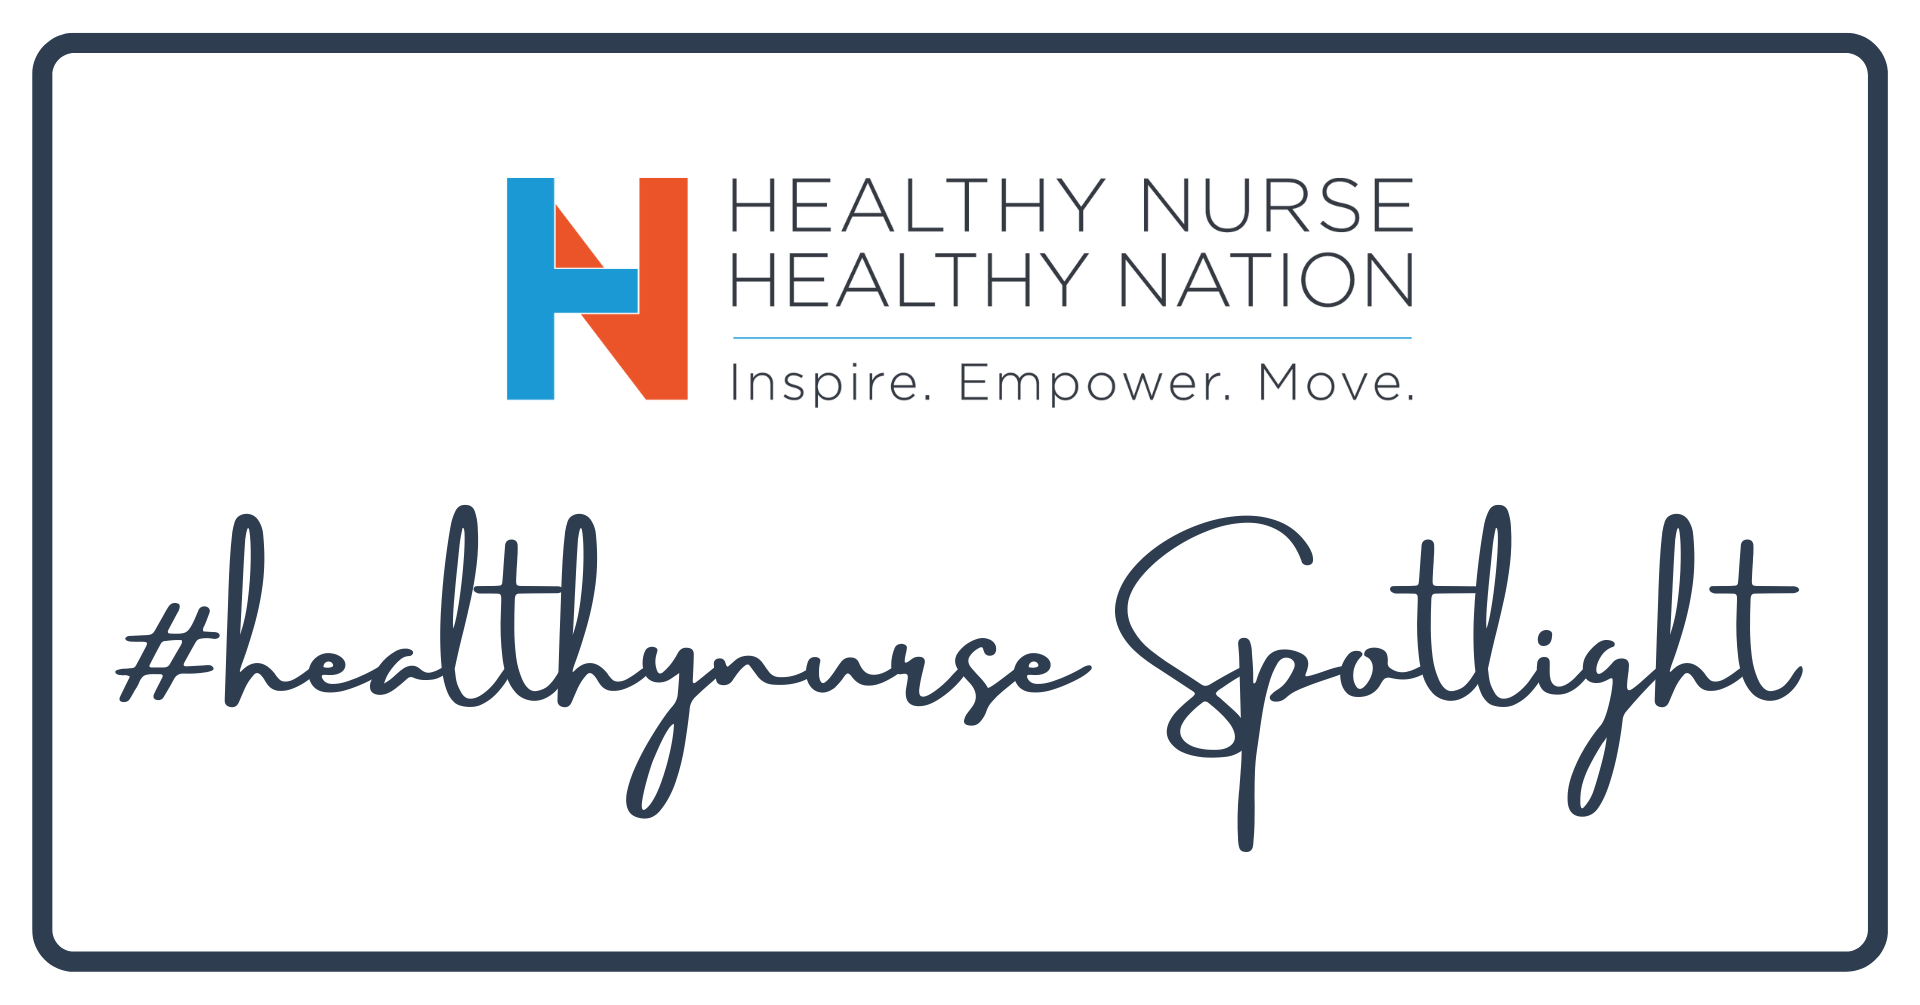 Healthy Nurse, Healthy Nation™ - #healthynurse Spotlight Series - Maria Creed, BSN, RN, CCM 4464